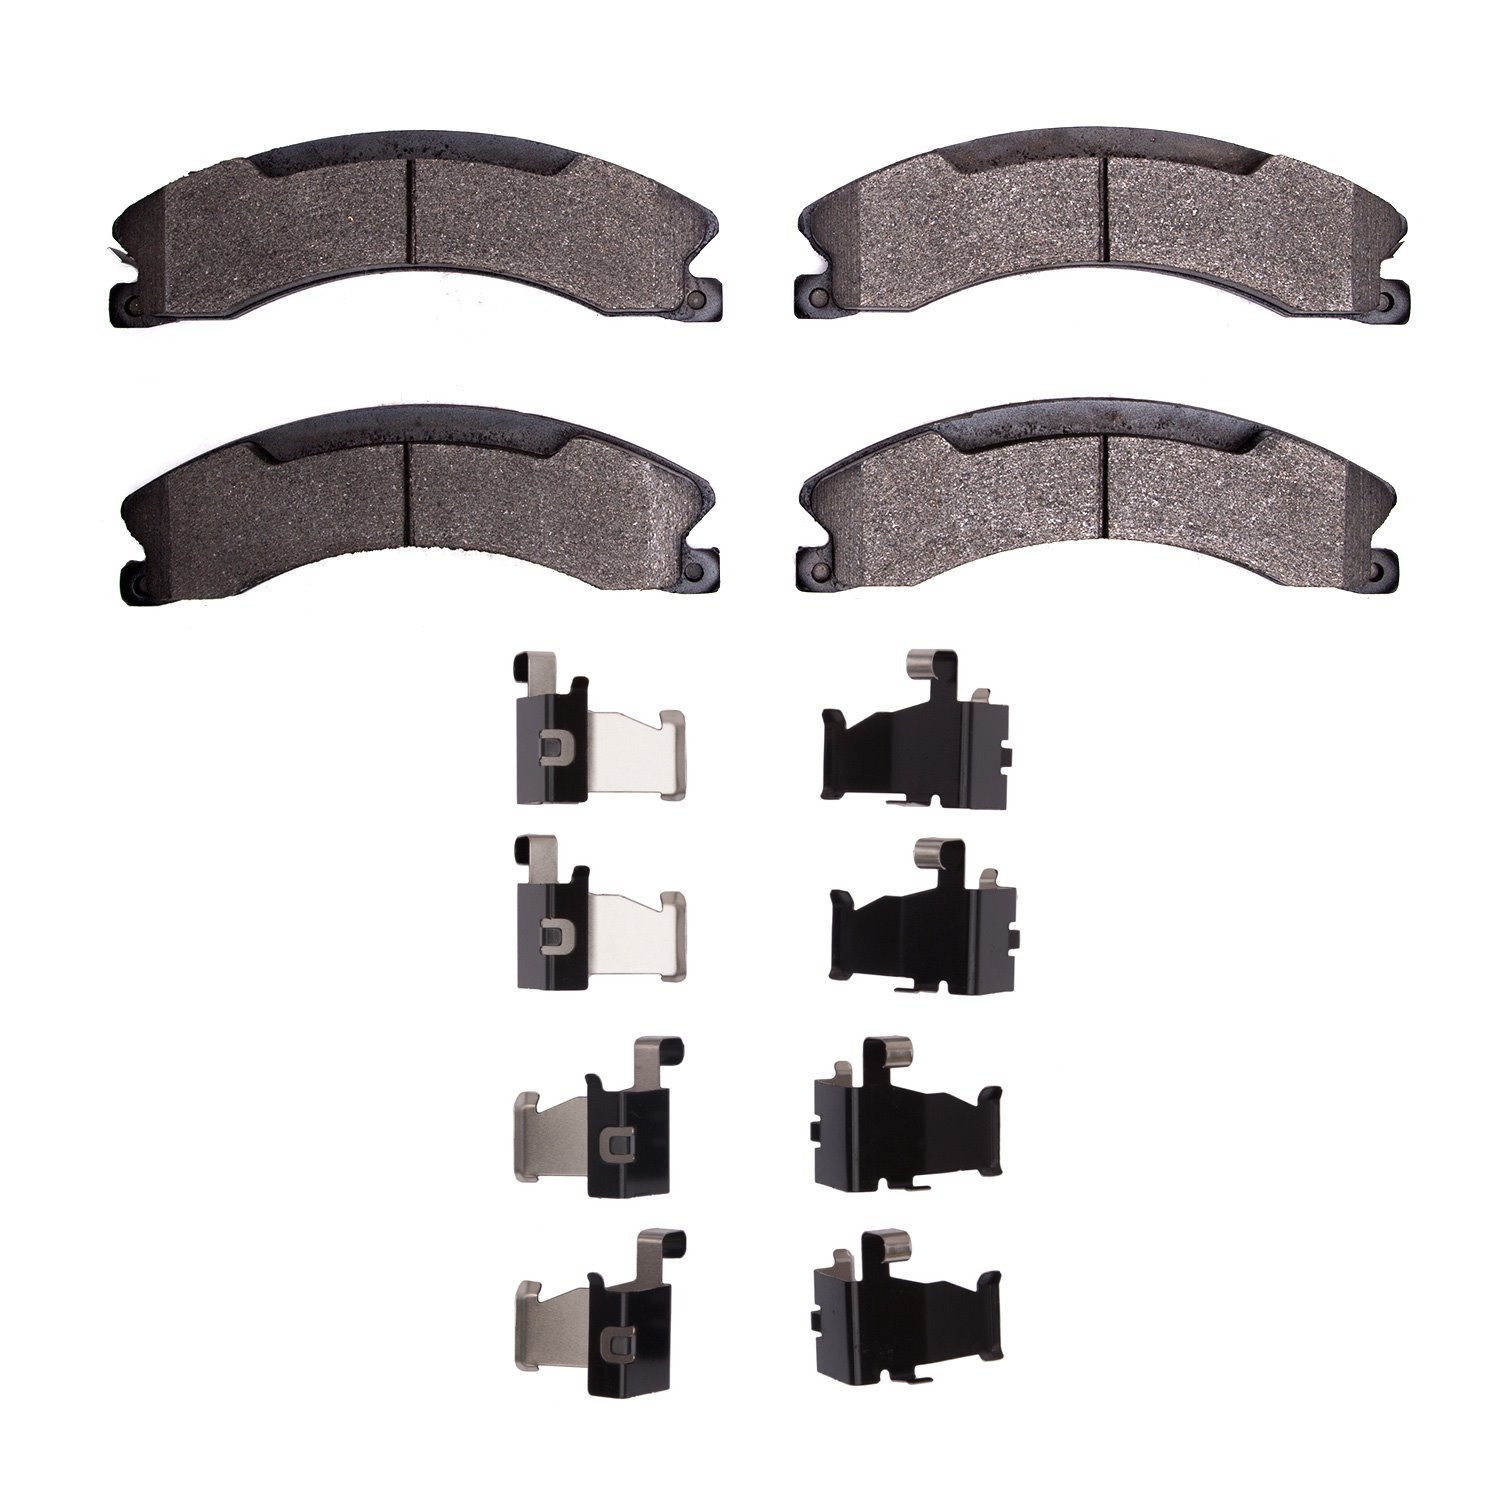 1310-1565-01 3000-Series Ceramic Brake Pads & Hardware Kit, Fits Select Multiple Makes/Models, Position: Fr,Front,Rear,Rr